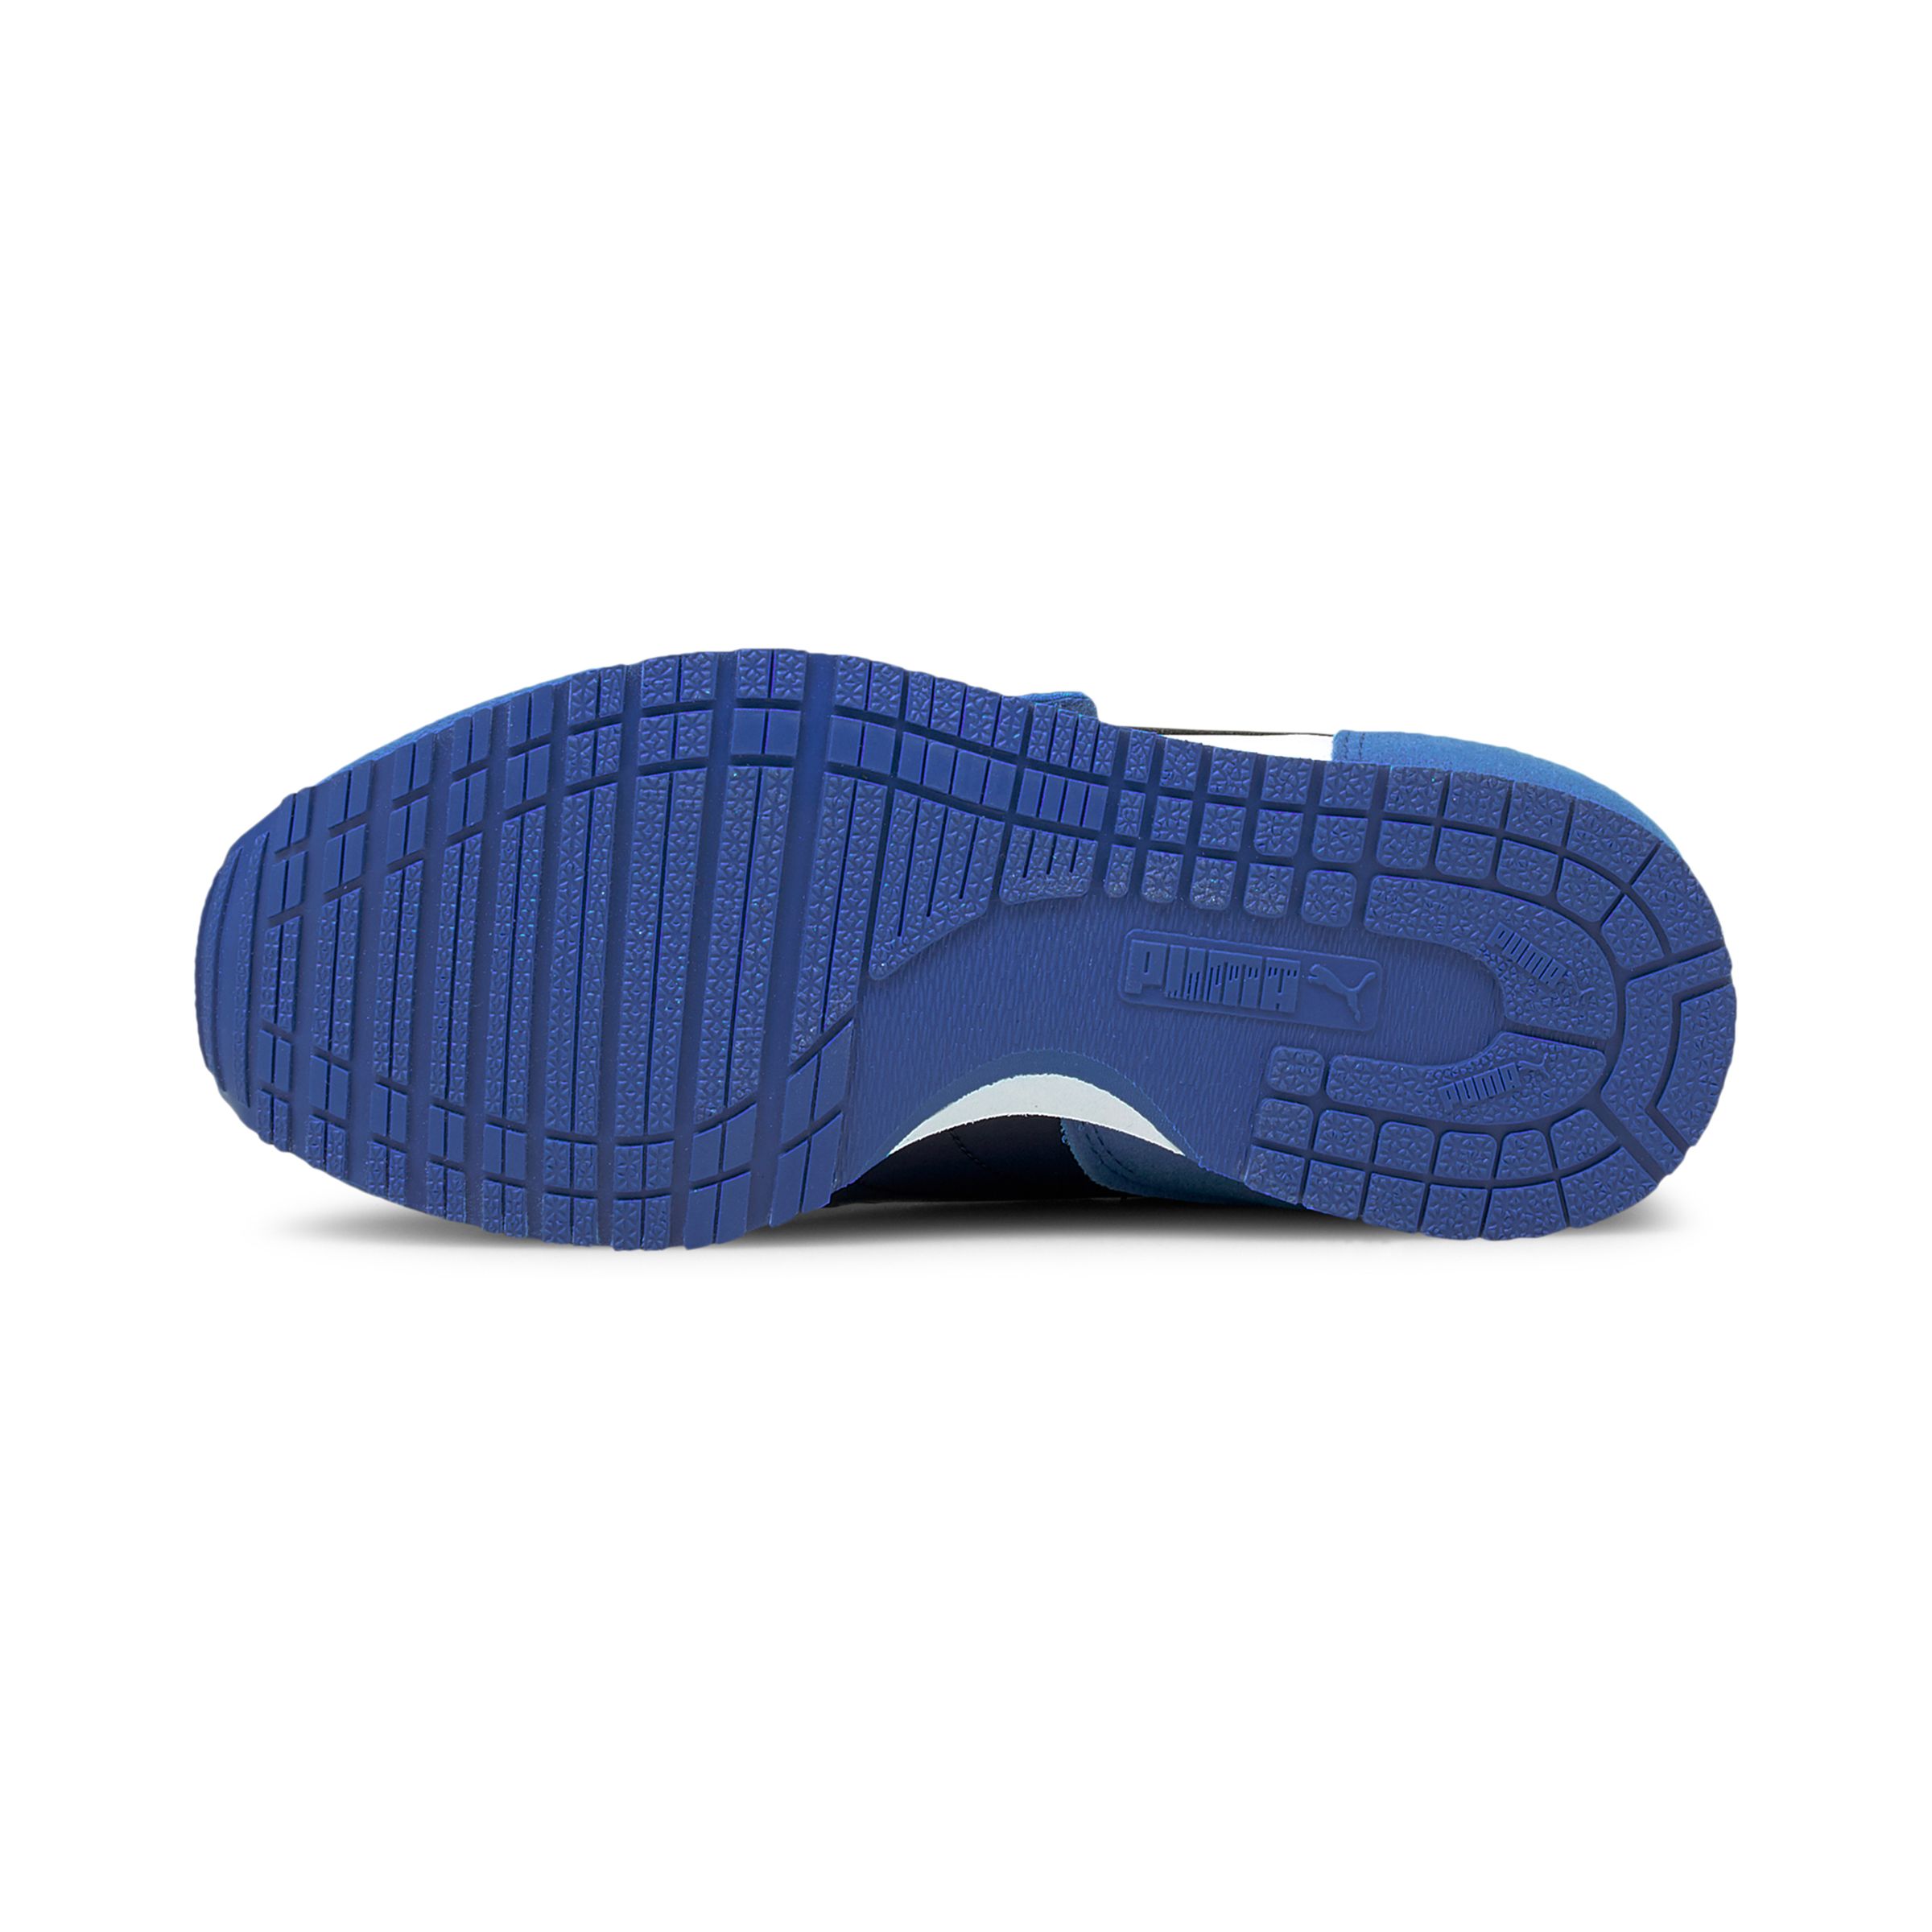 PUMA Cabana Racer SL V PS Kids Sneaker Schuhe blau 360732 